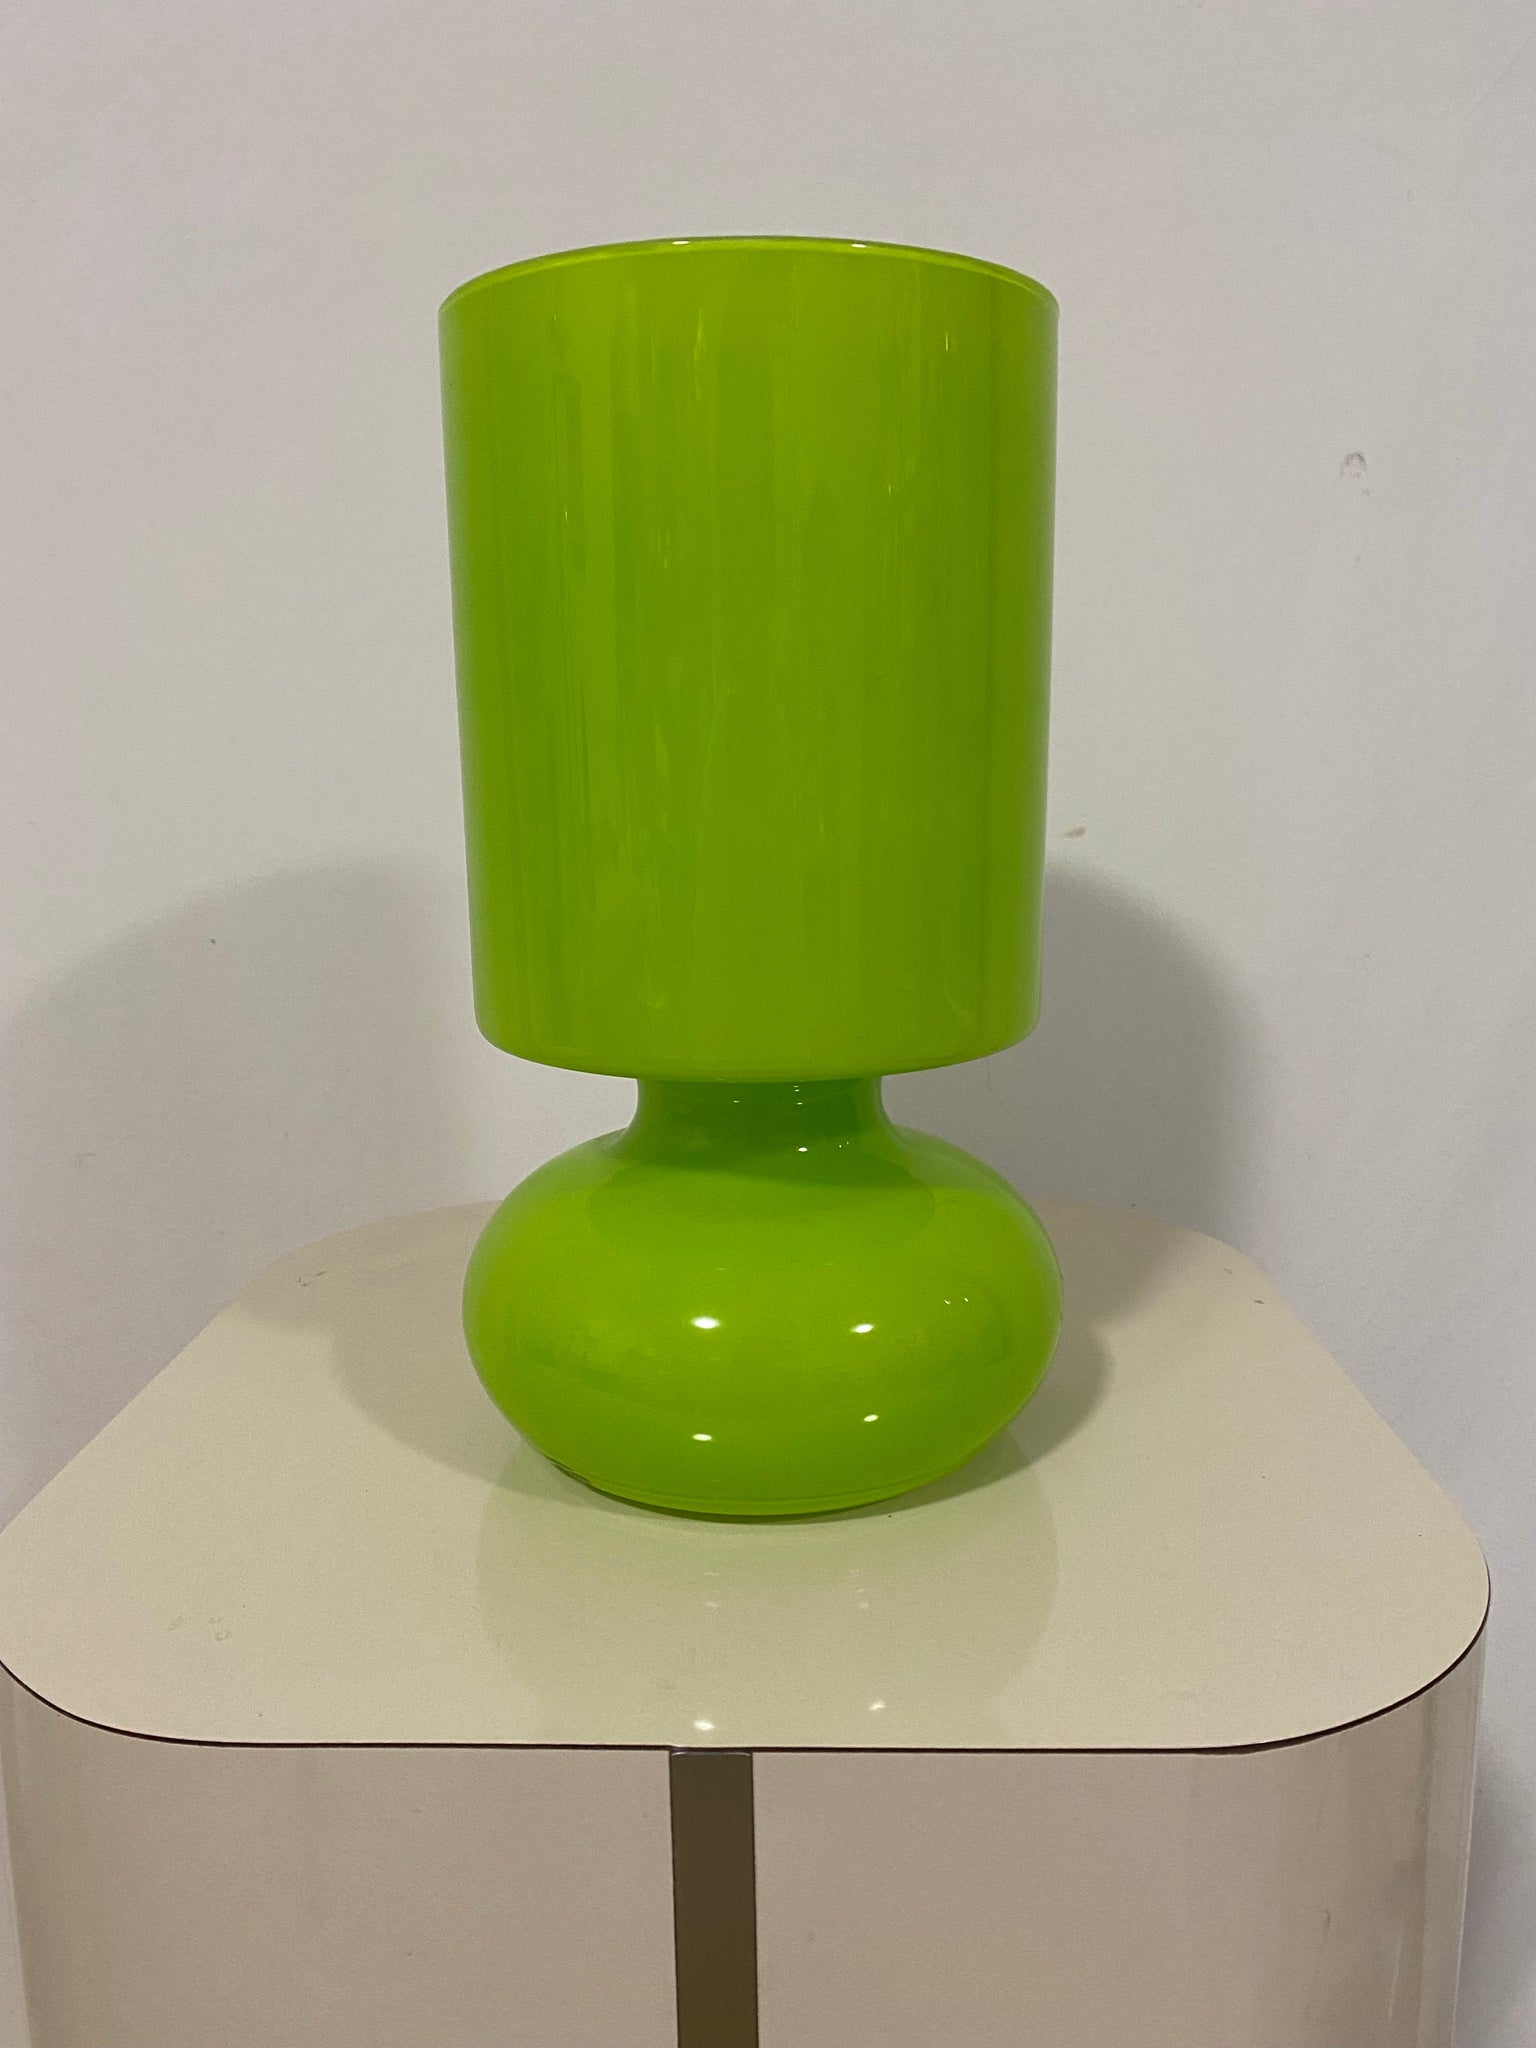 Lime green IKEA Lykta lamp